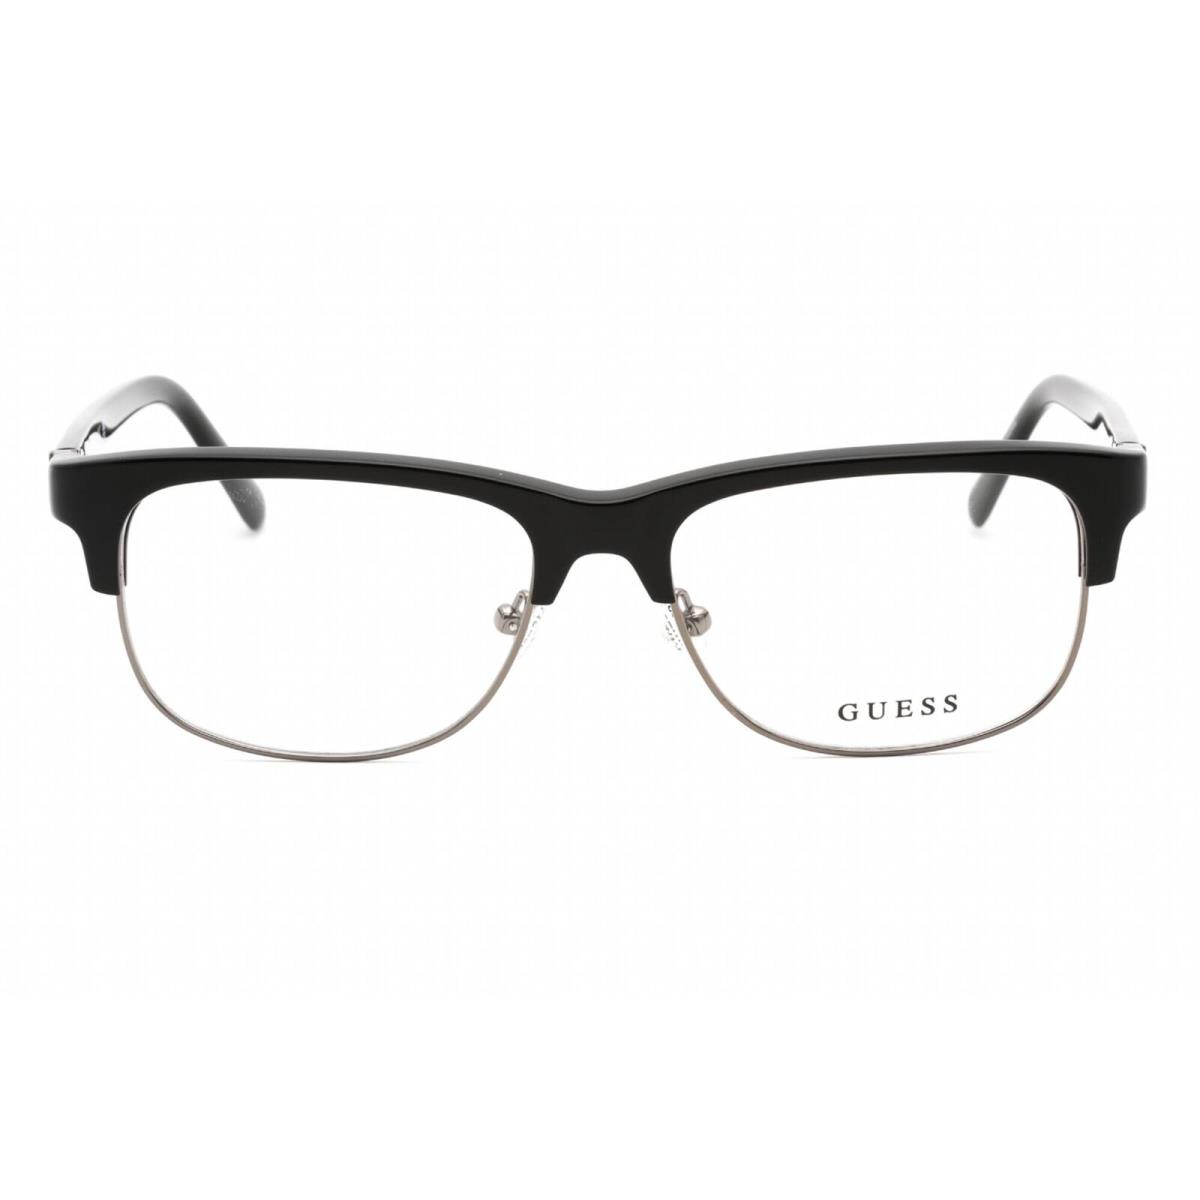 Guess Men`s Eyeglasses Clear Demo Lens Shiny Black Rectangular Frame GU50081 001